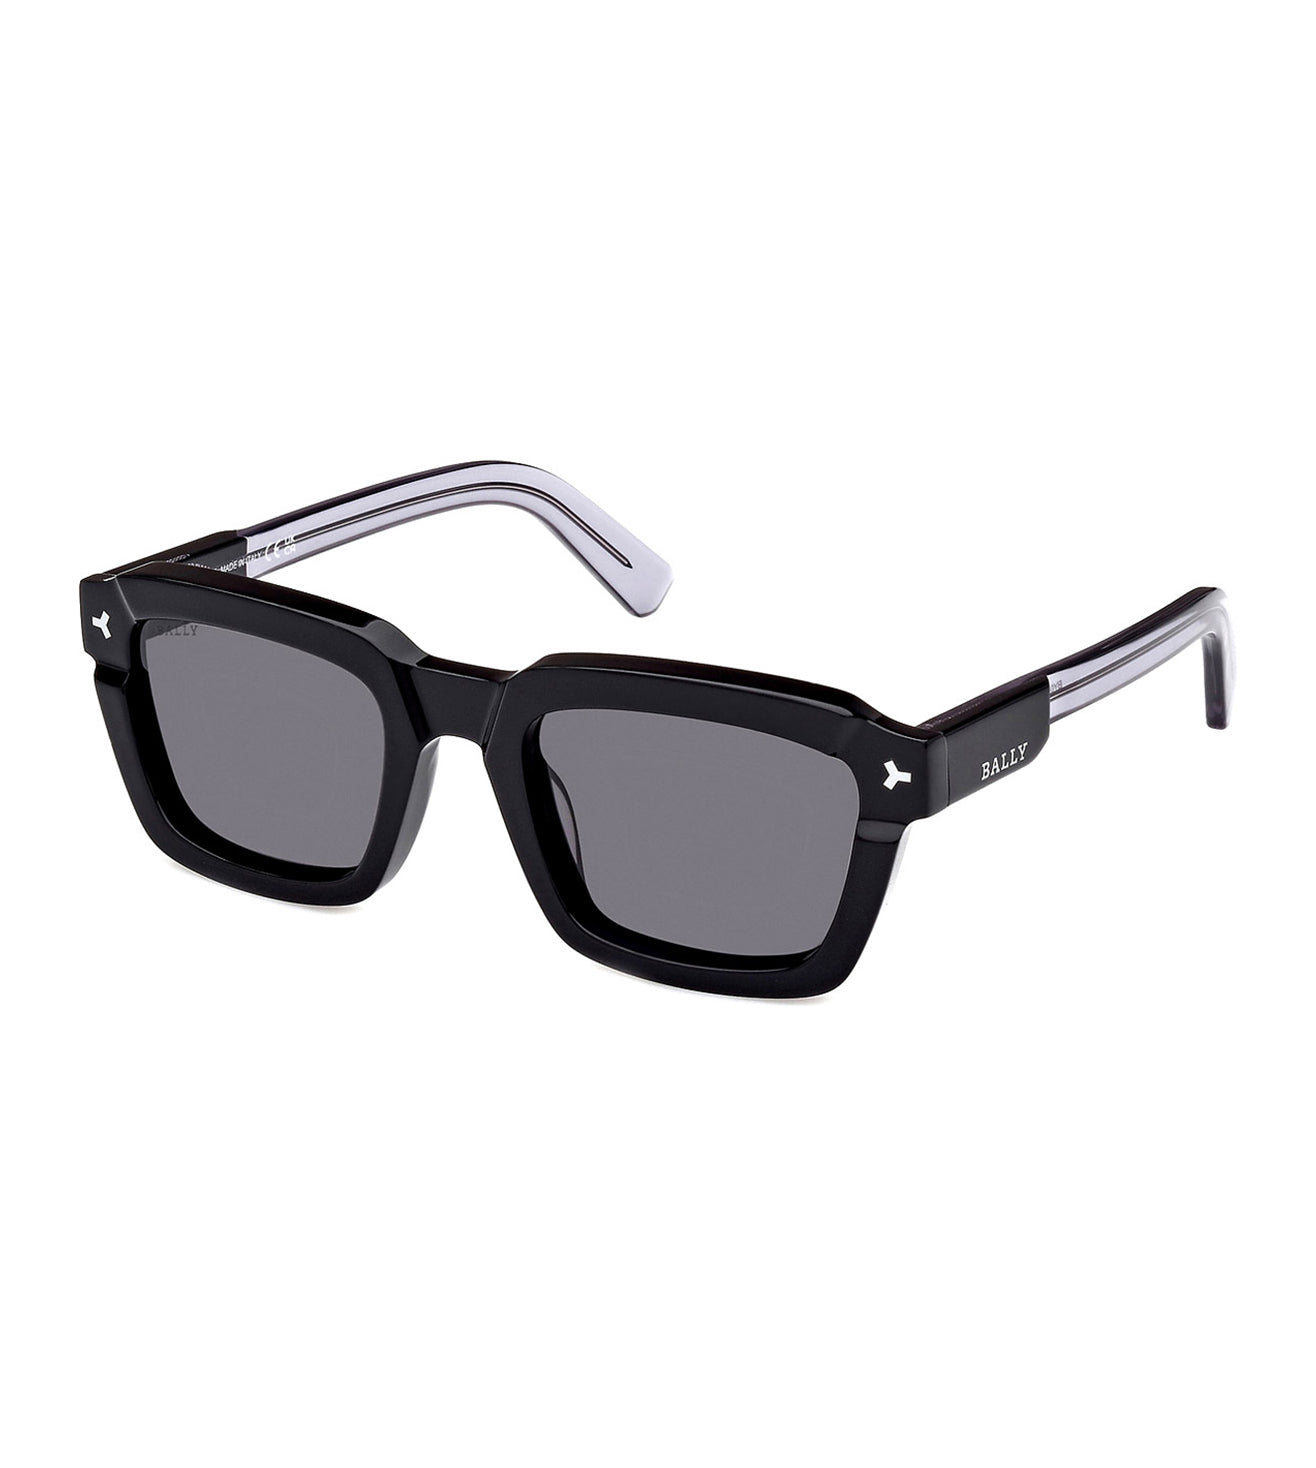 Bally Men's Smoke Grey Rectangular Sunglasses